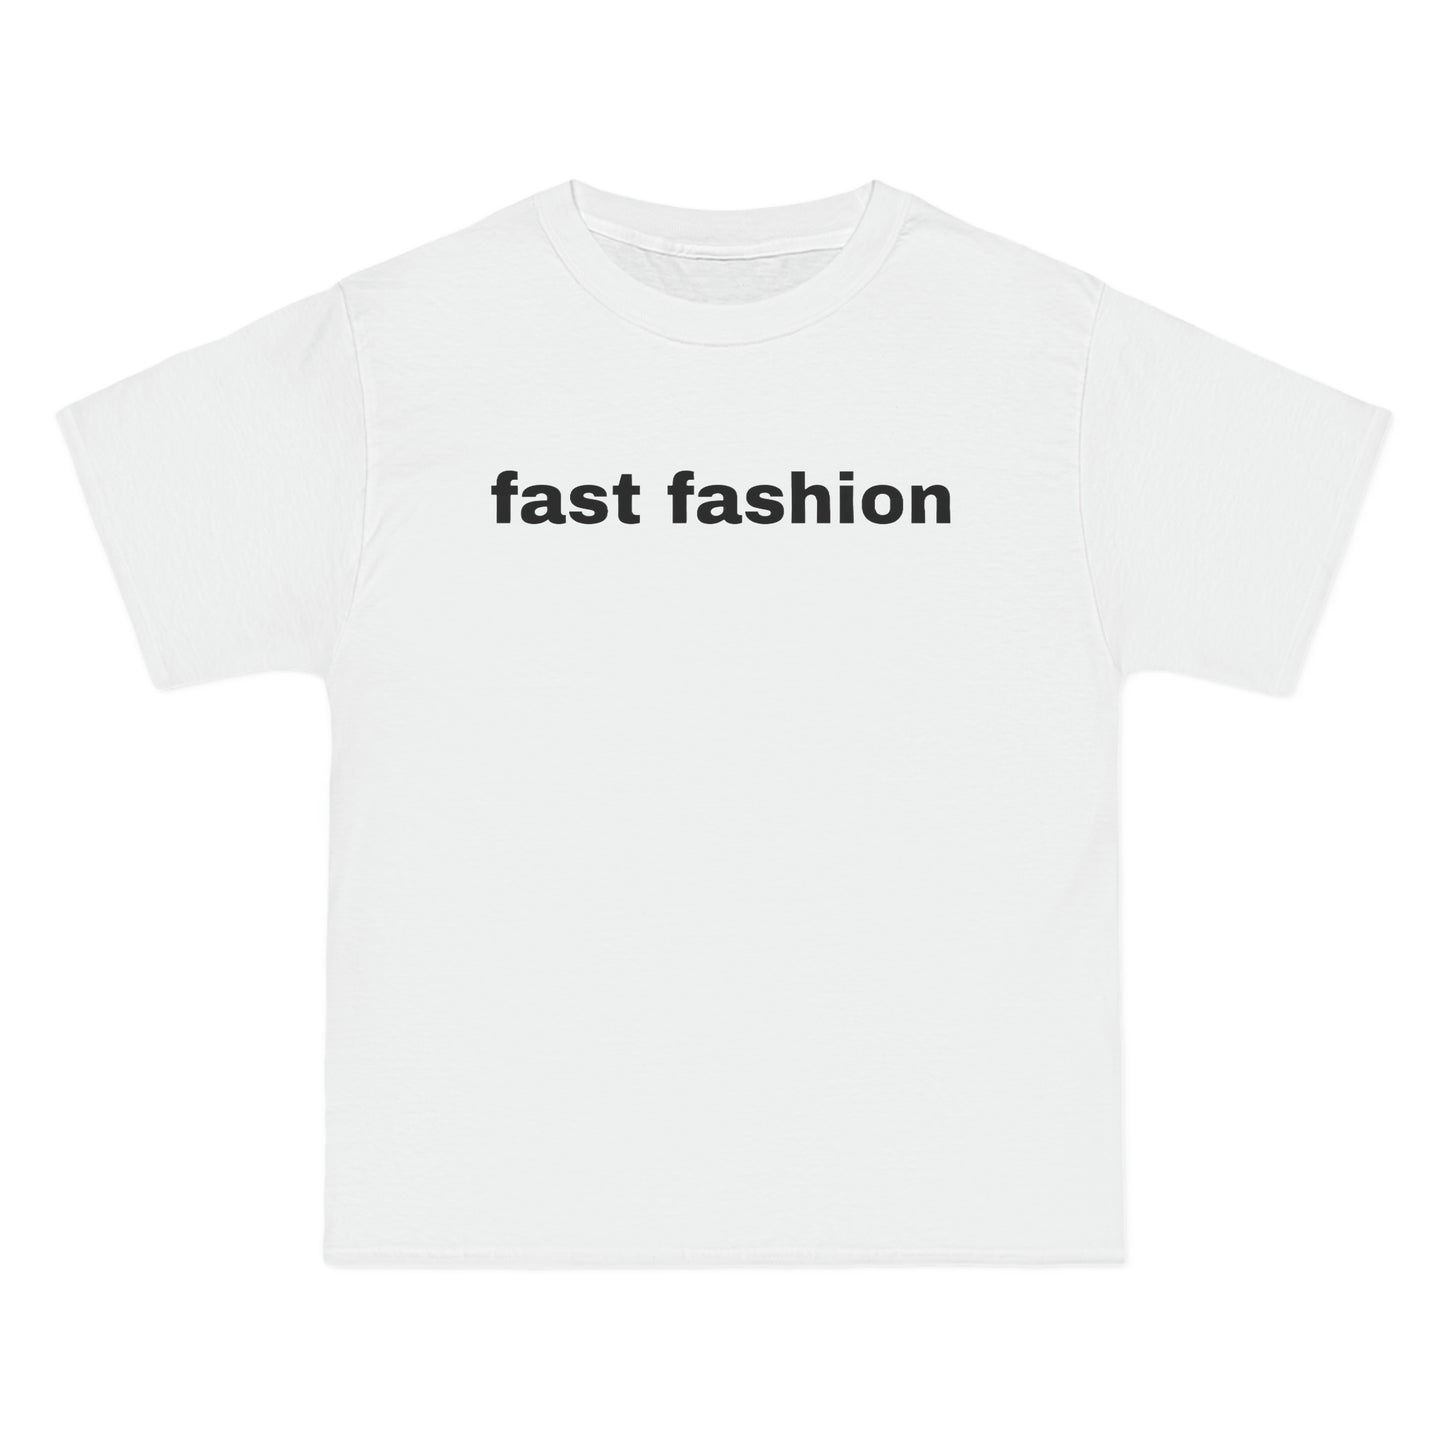 fast fashion Tee